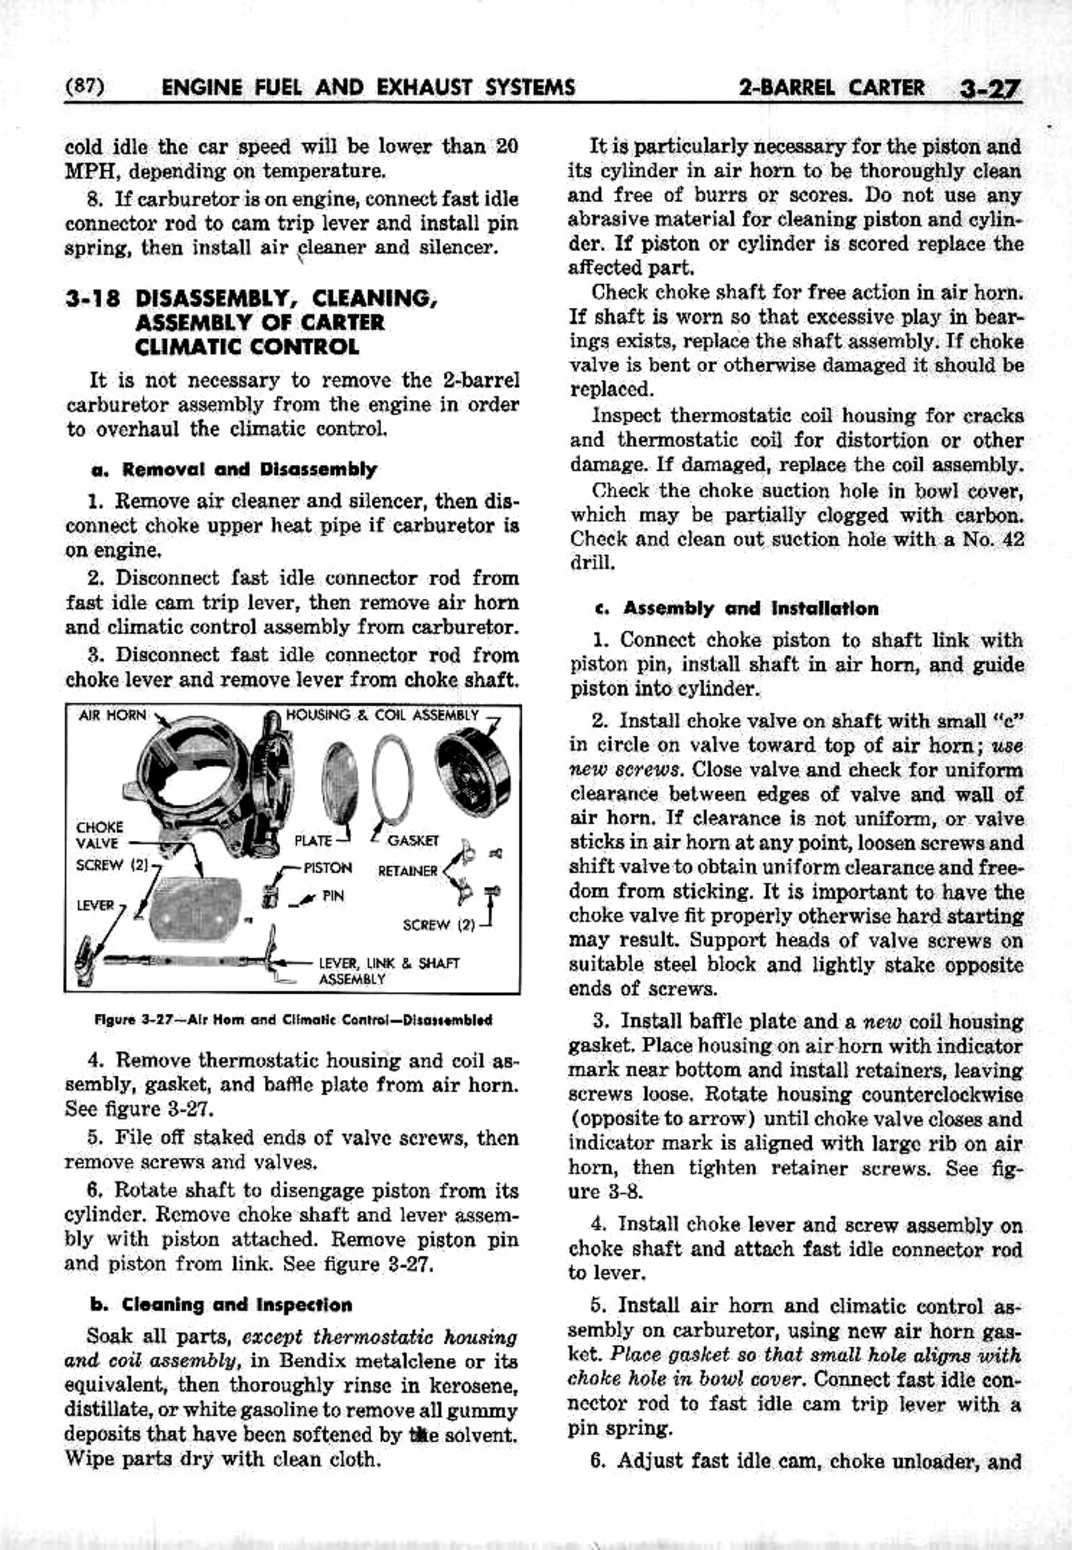 n_04 1953 Buick Shop Manual - Engine Fuel & Exhaust-027-027.jpg